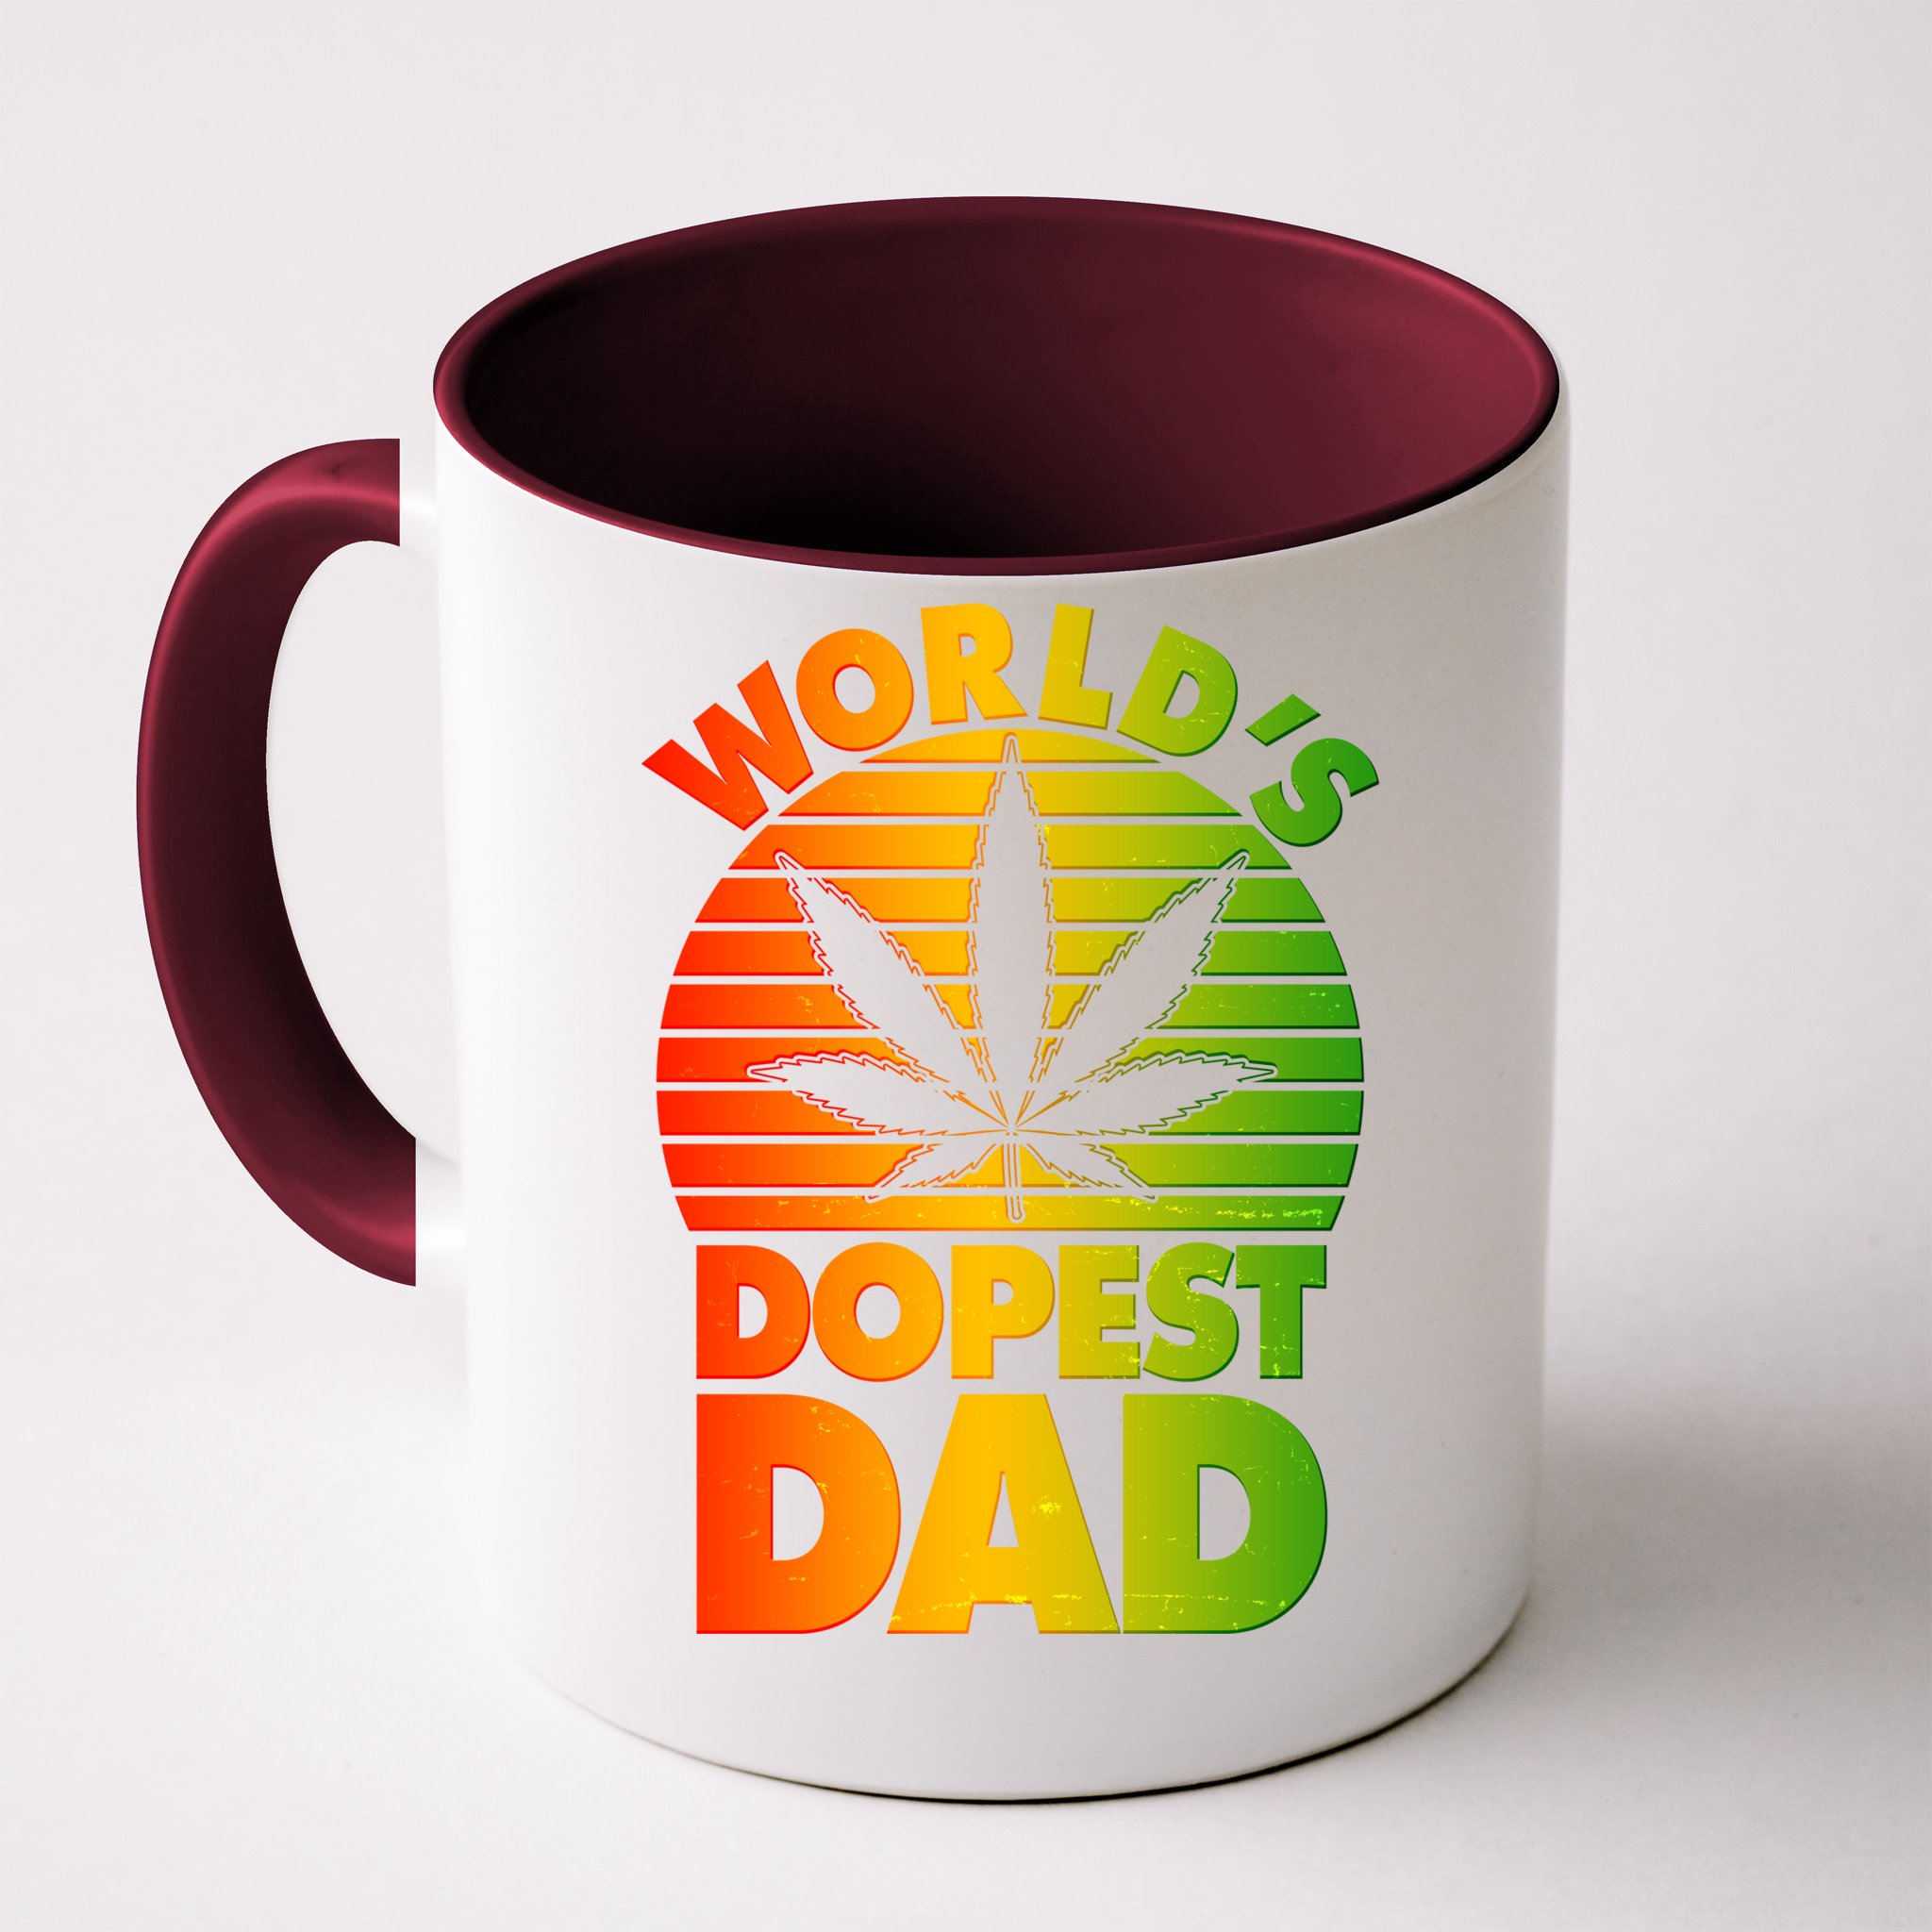 Details about   Weed World's Dopest Dad Mug Father's Day Marijuana Cannabis Leaf Funny Mug Gift 